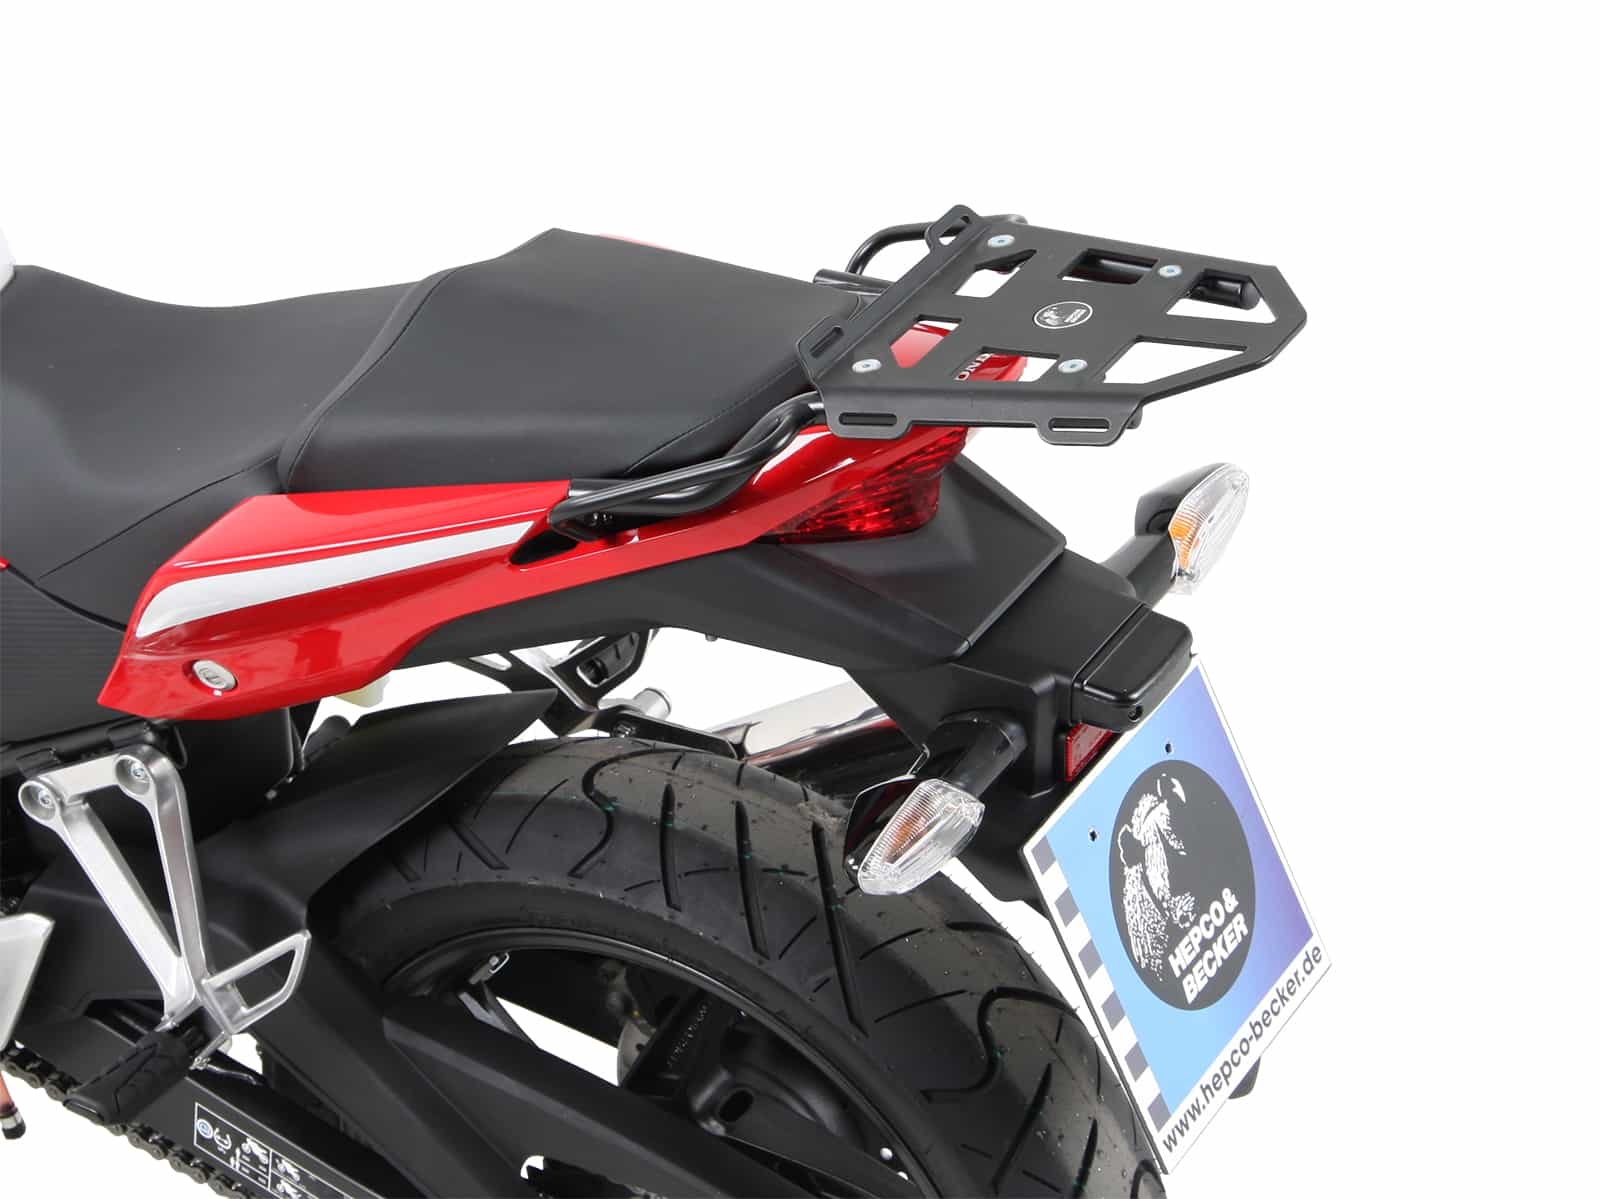 Minirack soft luggage rear rack for Honda CBR 250 R (2011-)